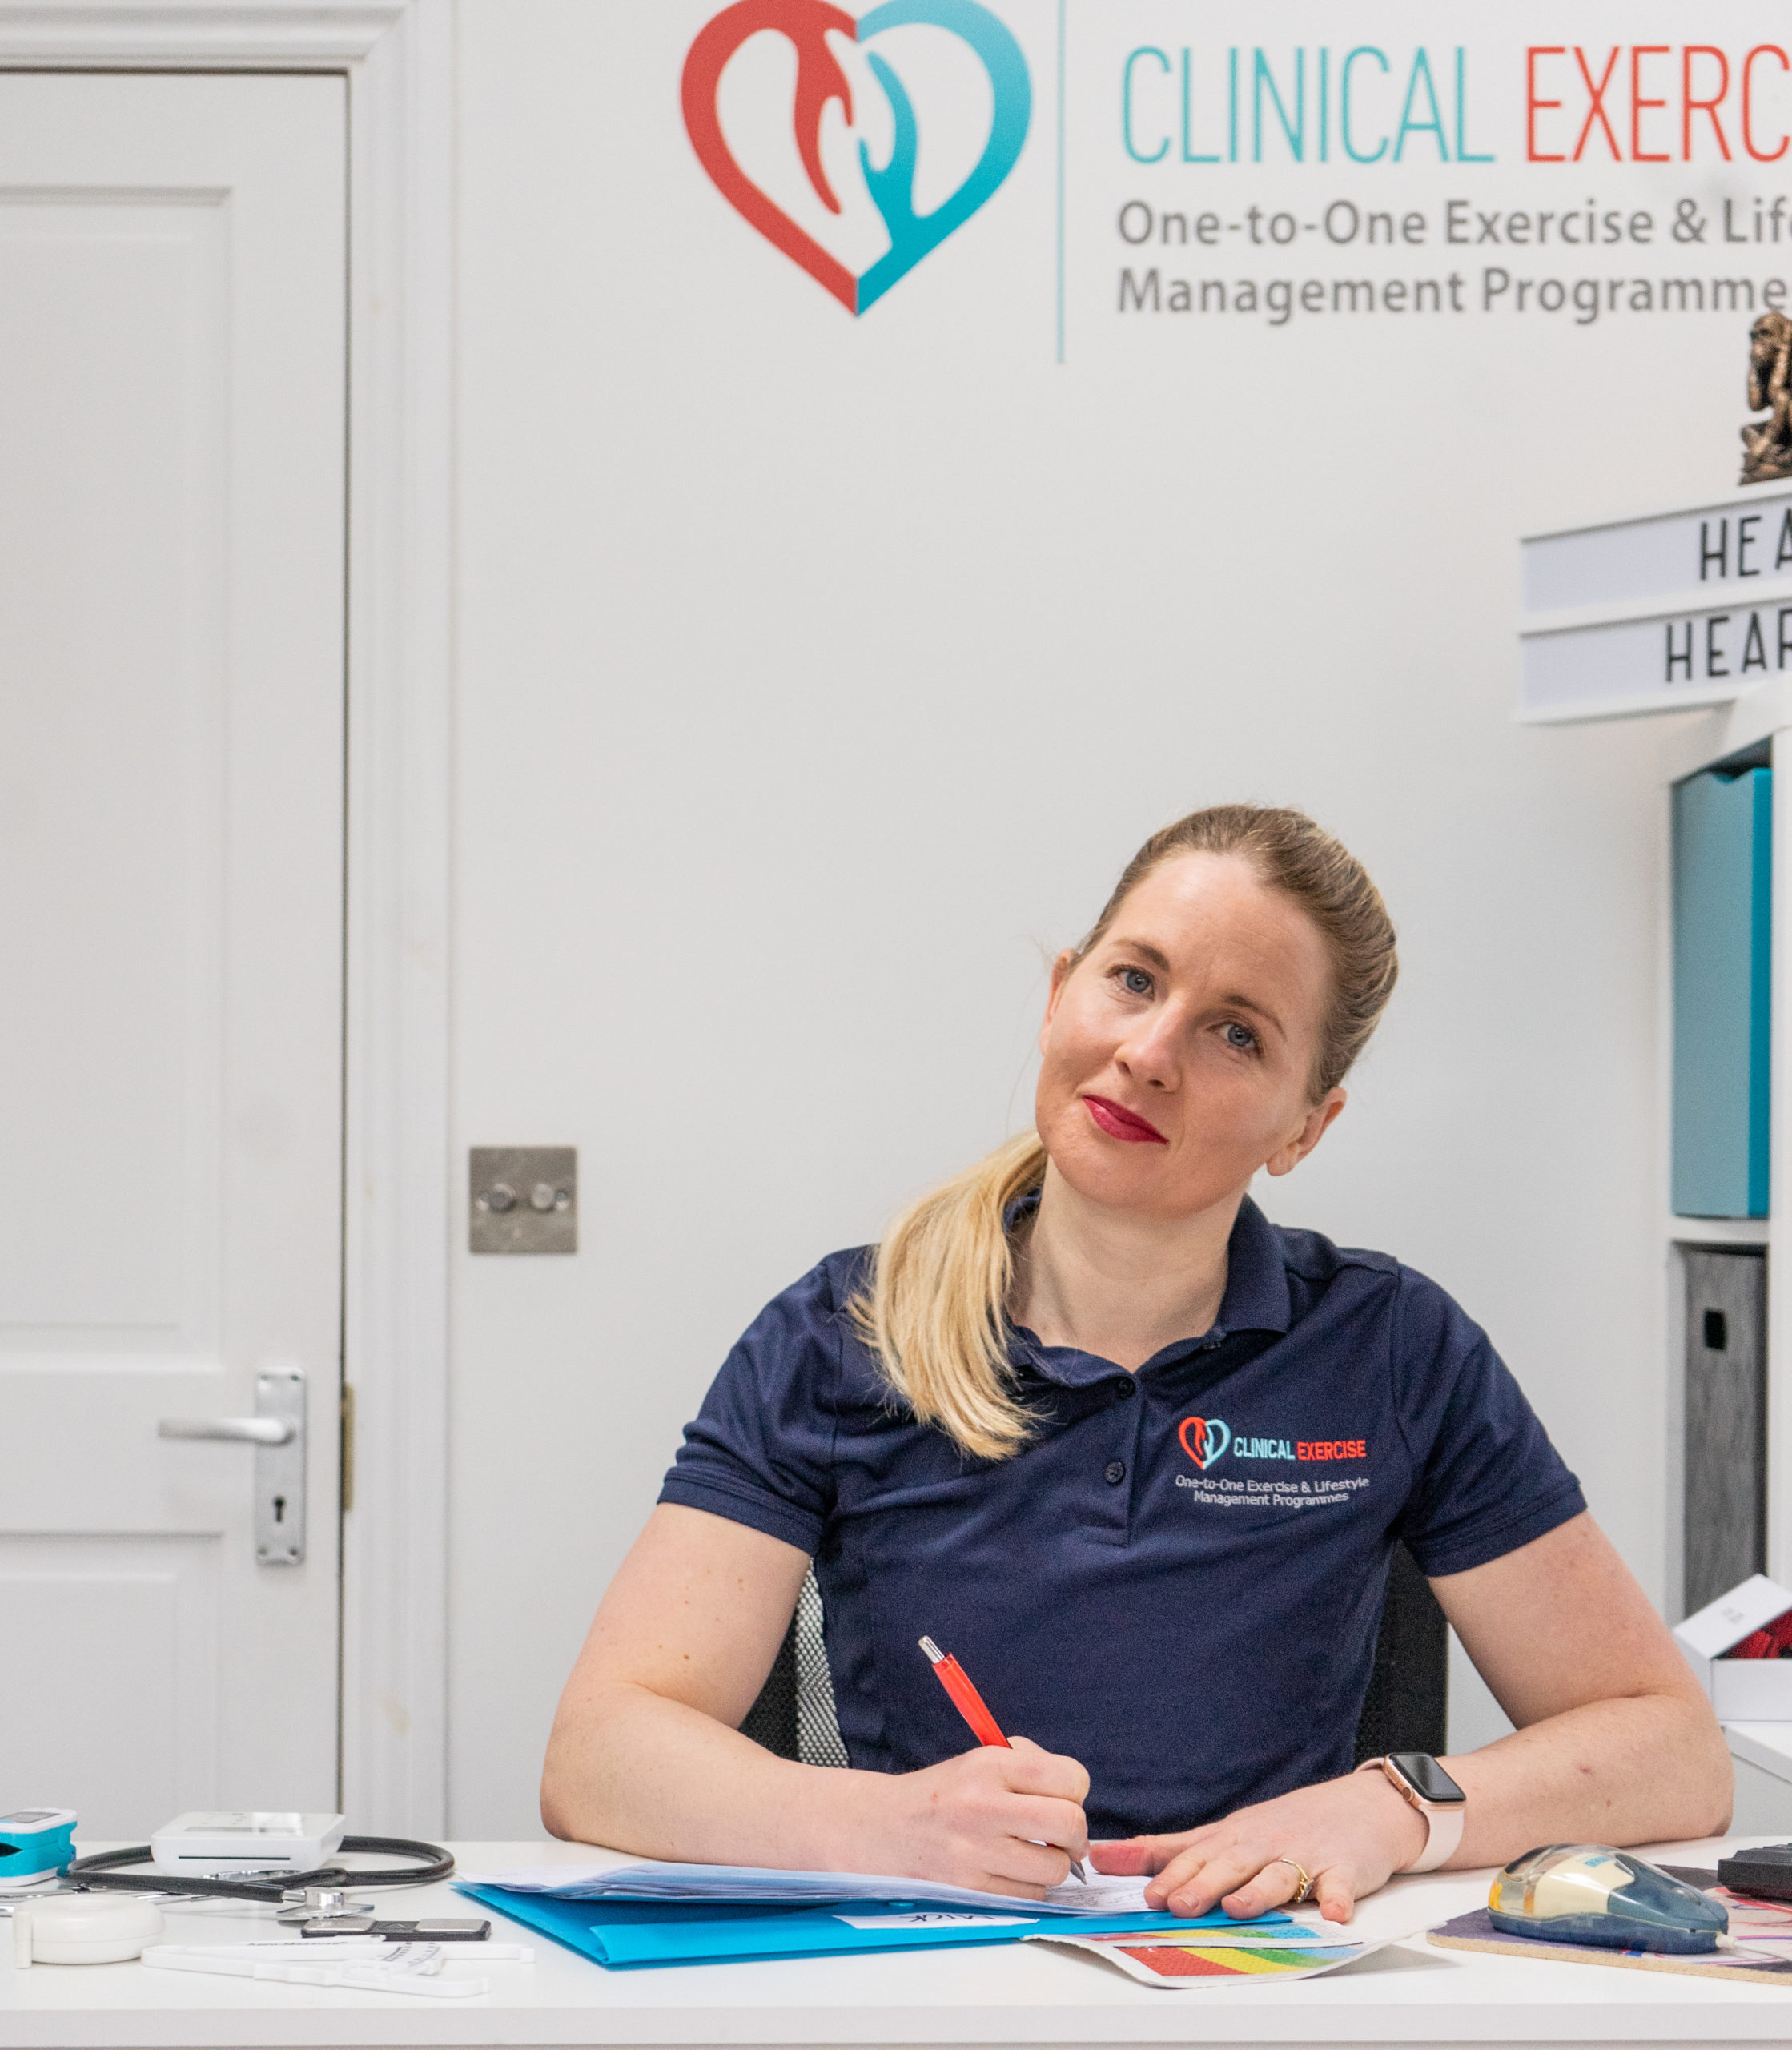 Angela Hartley, Cardiac Nurse and Personal Trainer for Cardiac Rehab